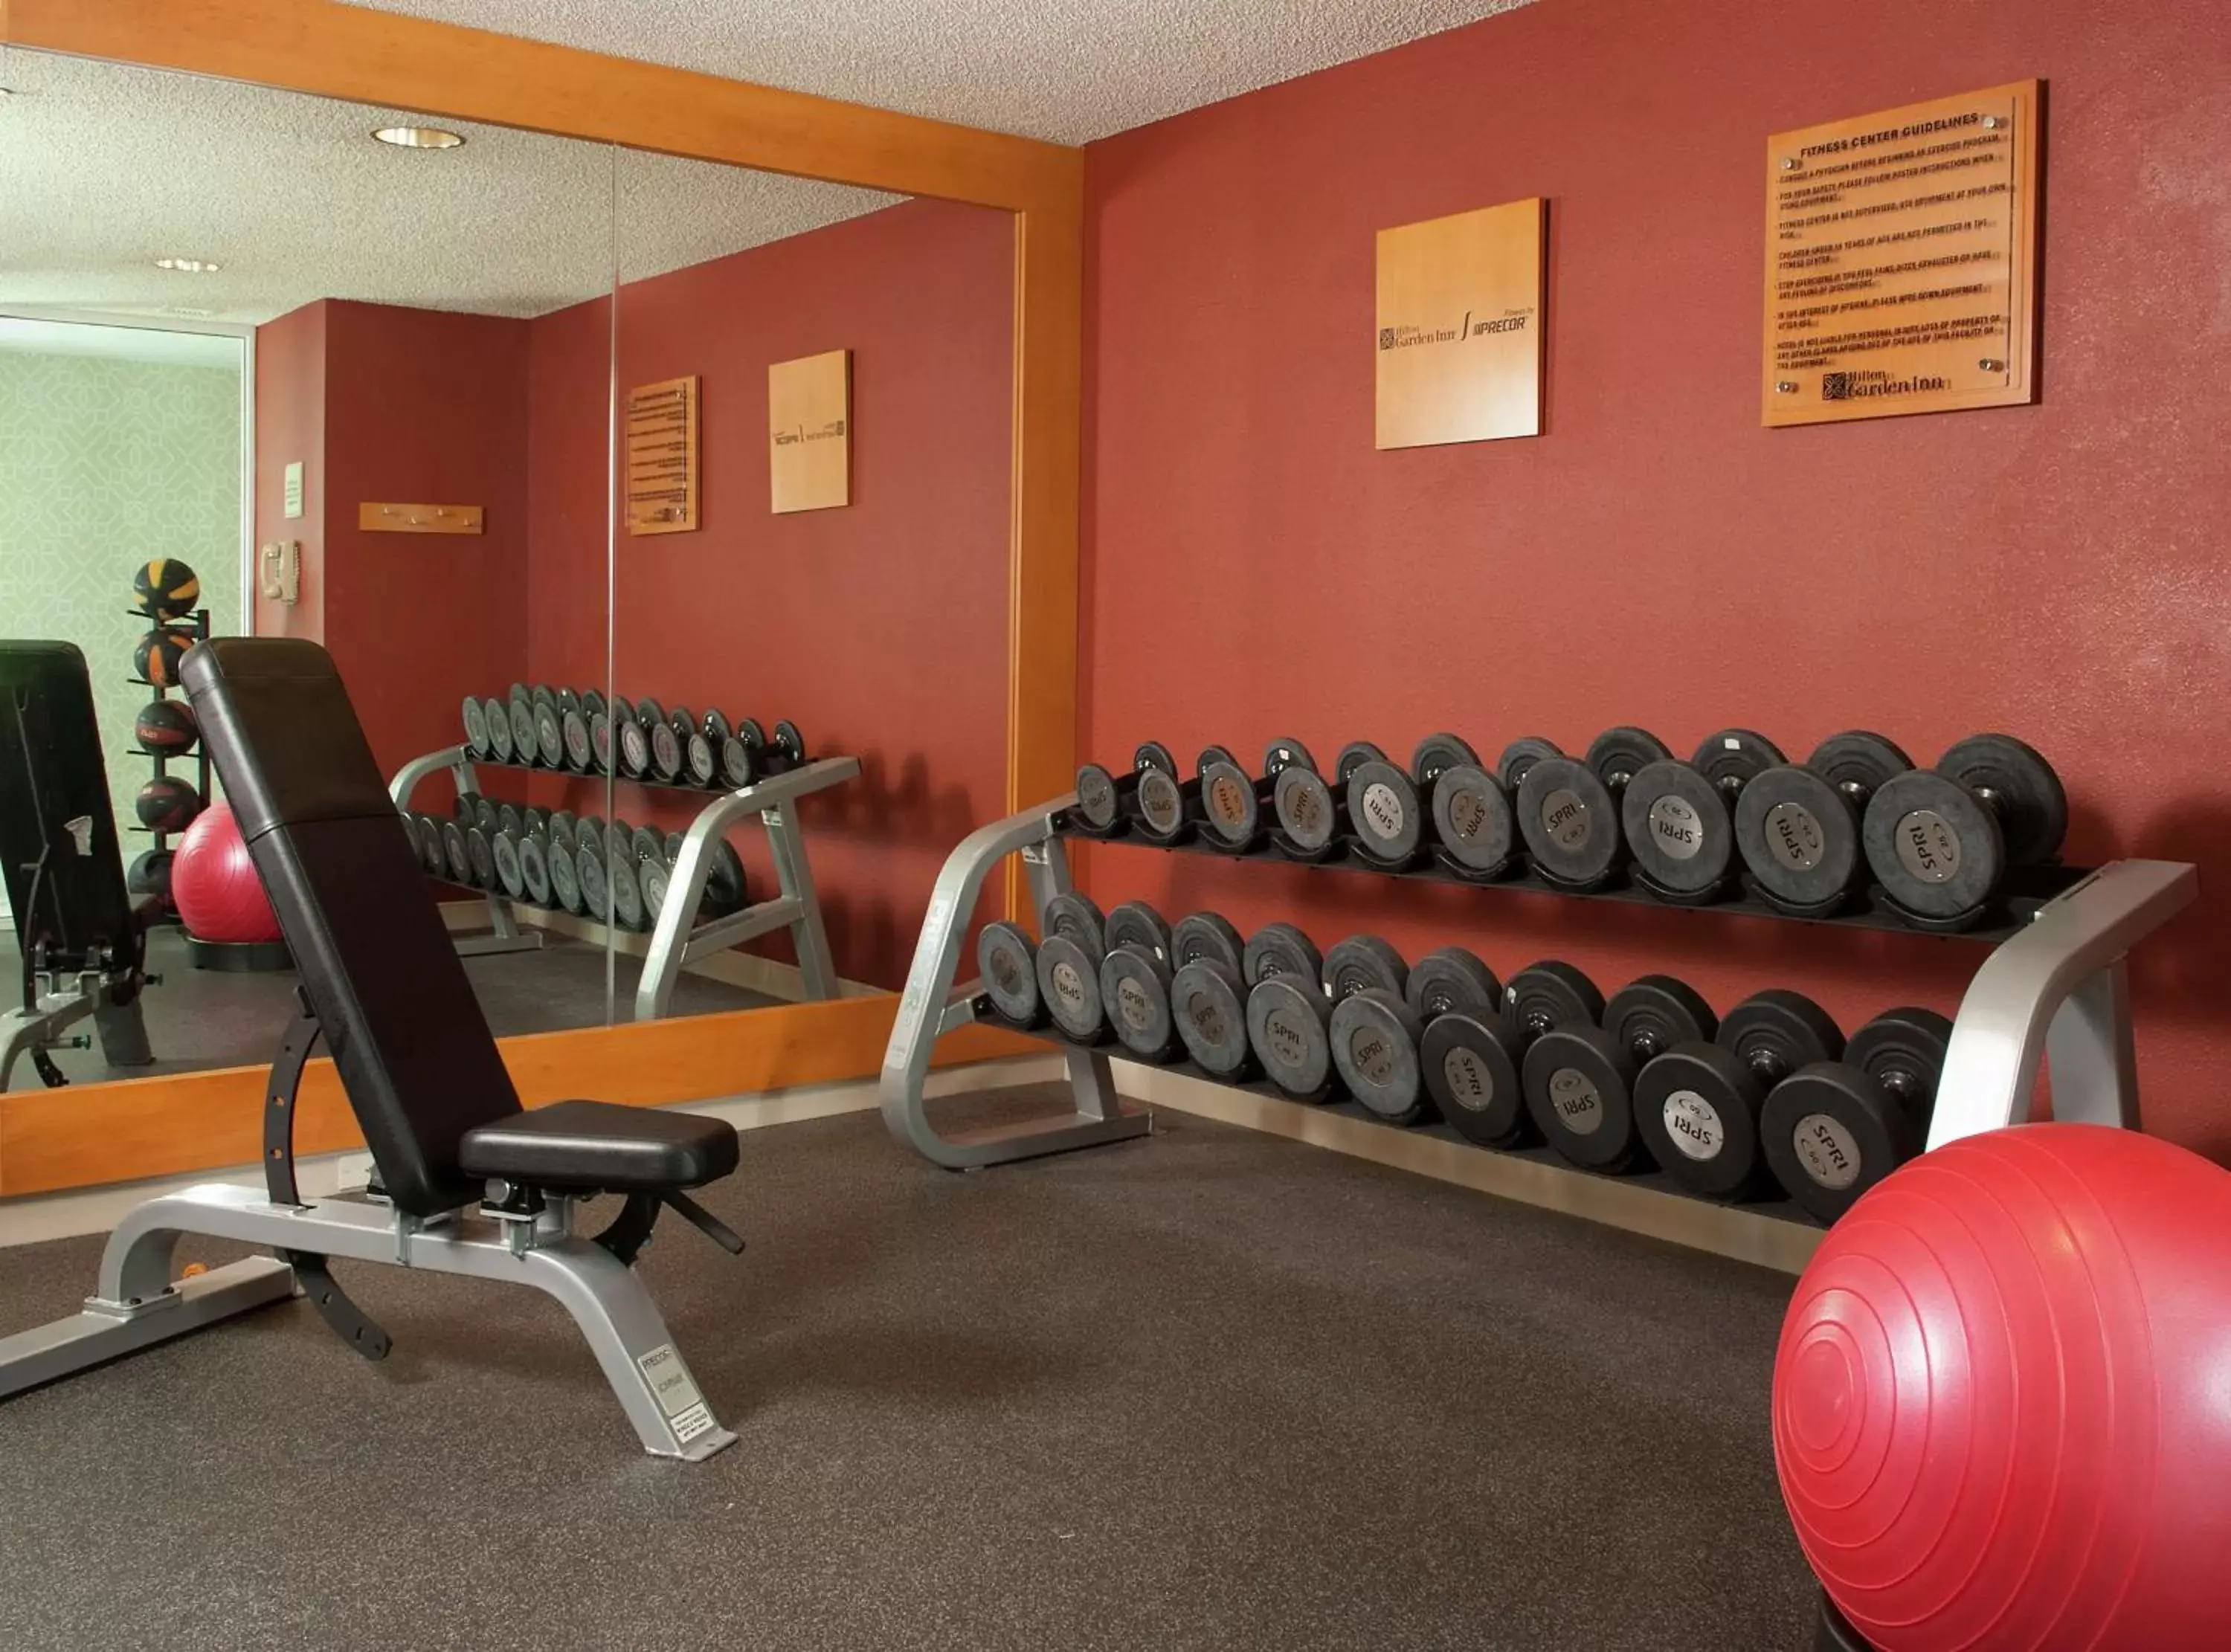 Fitness centre/facilities, Fitness Center/Facilities in Hilton Garden Inn Orlando Airport